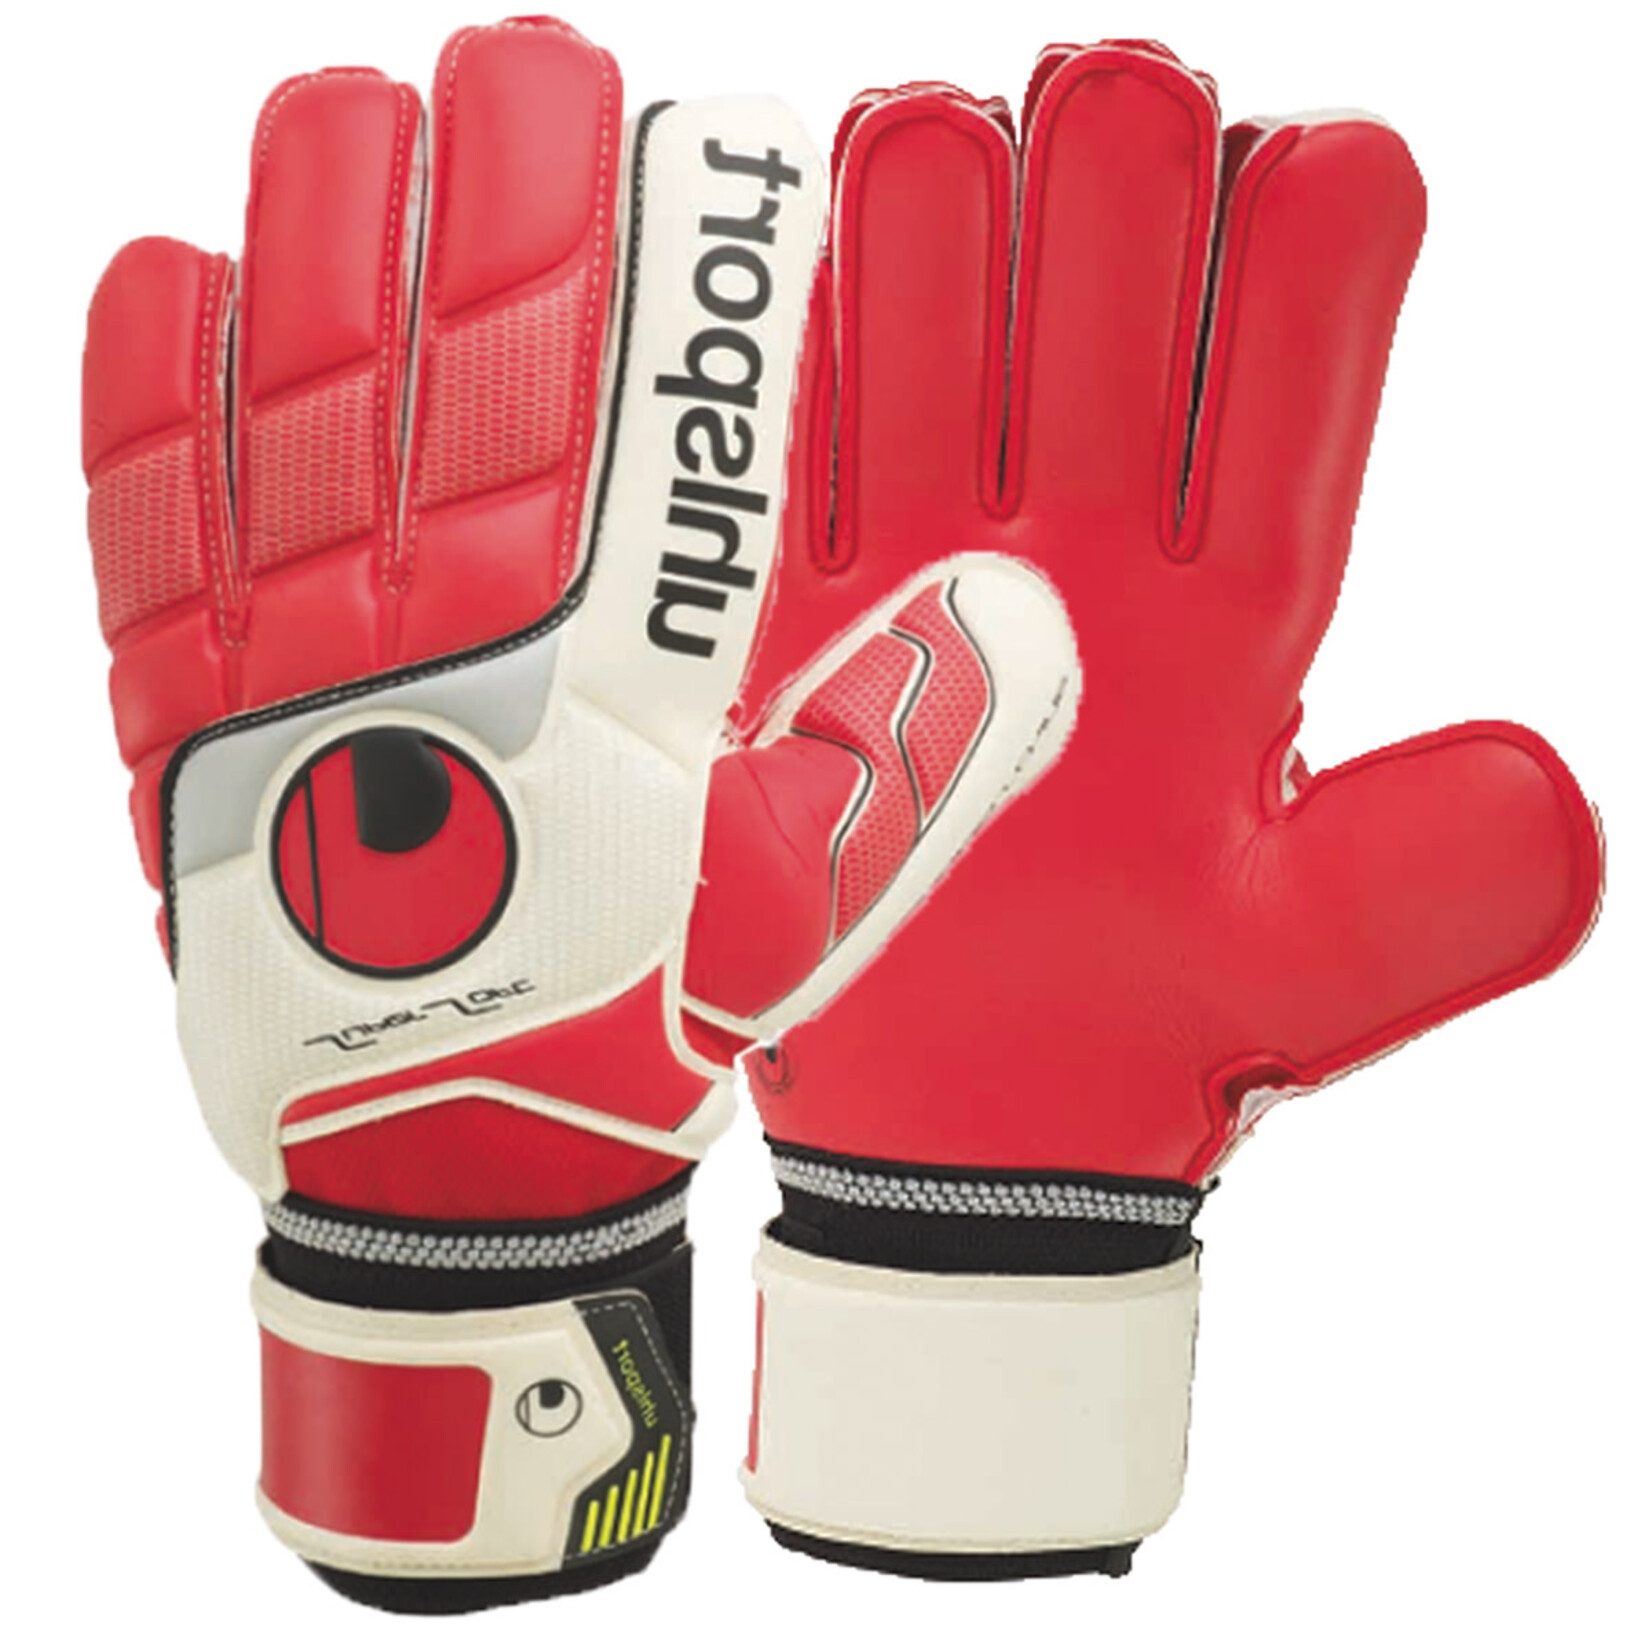 UhlSport UhlSport Fangmaschine Supersoft Goalkeeper Gloves Red/White